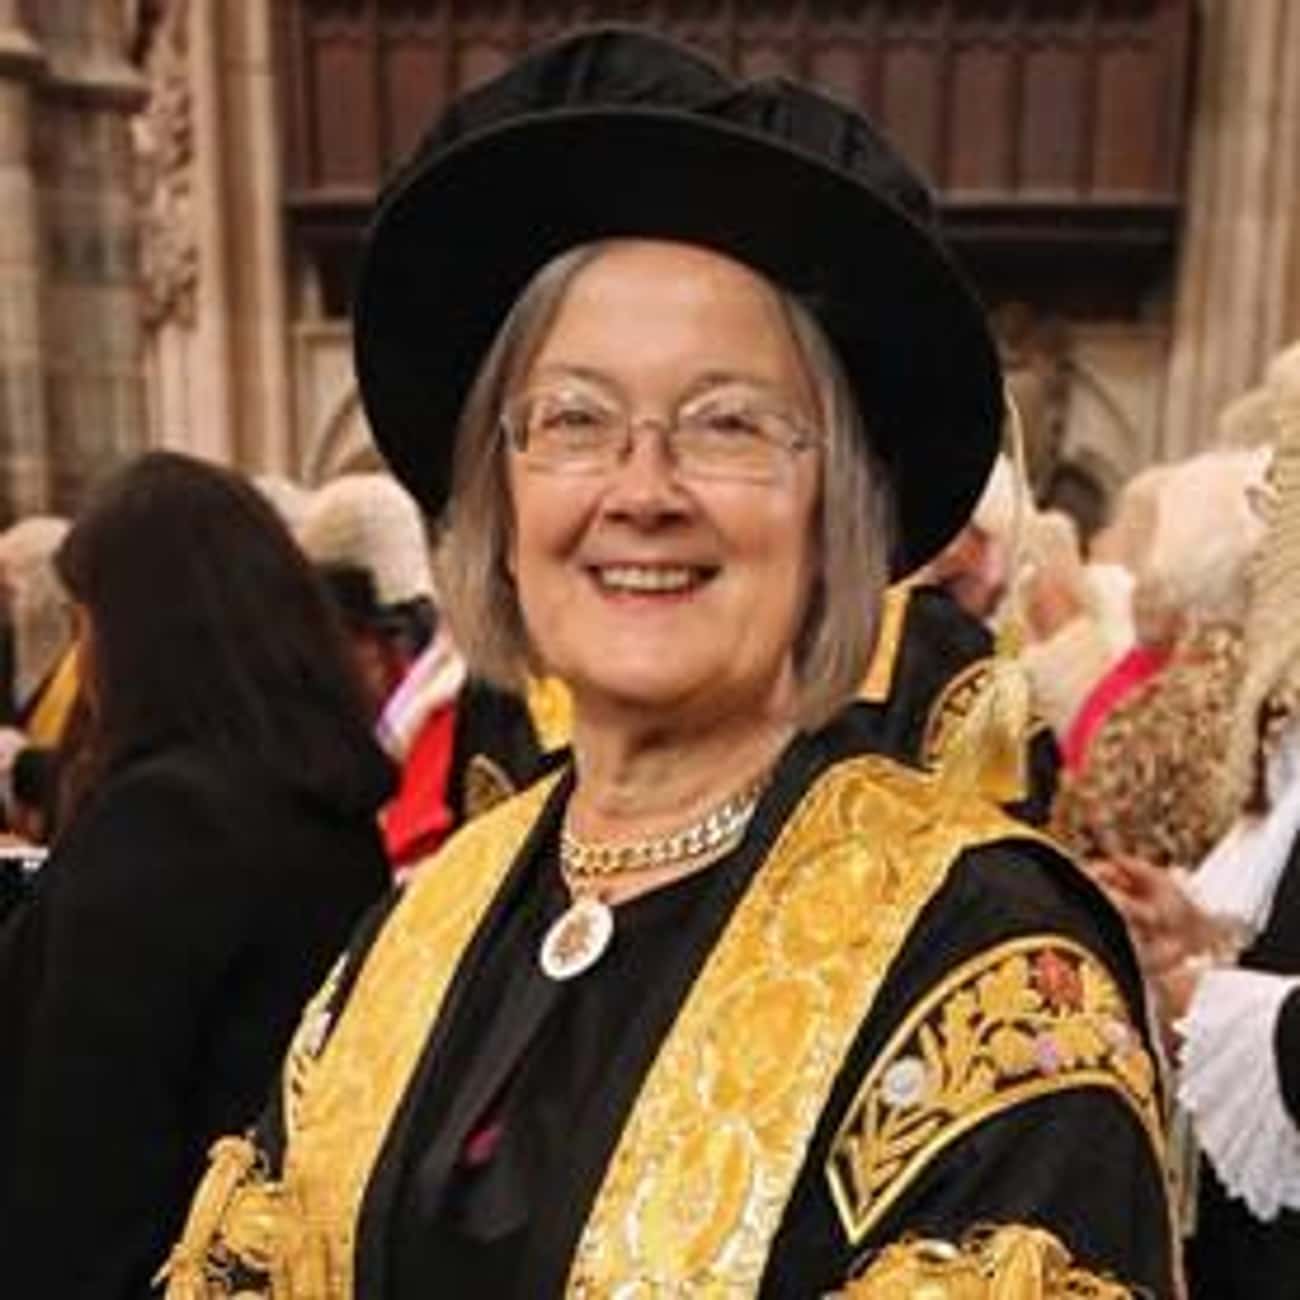 Brenda Hale, Baroness Hale of Richmond